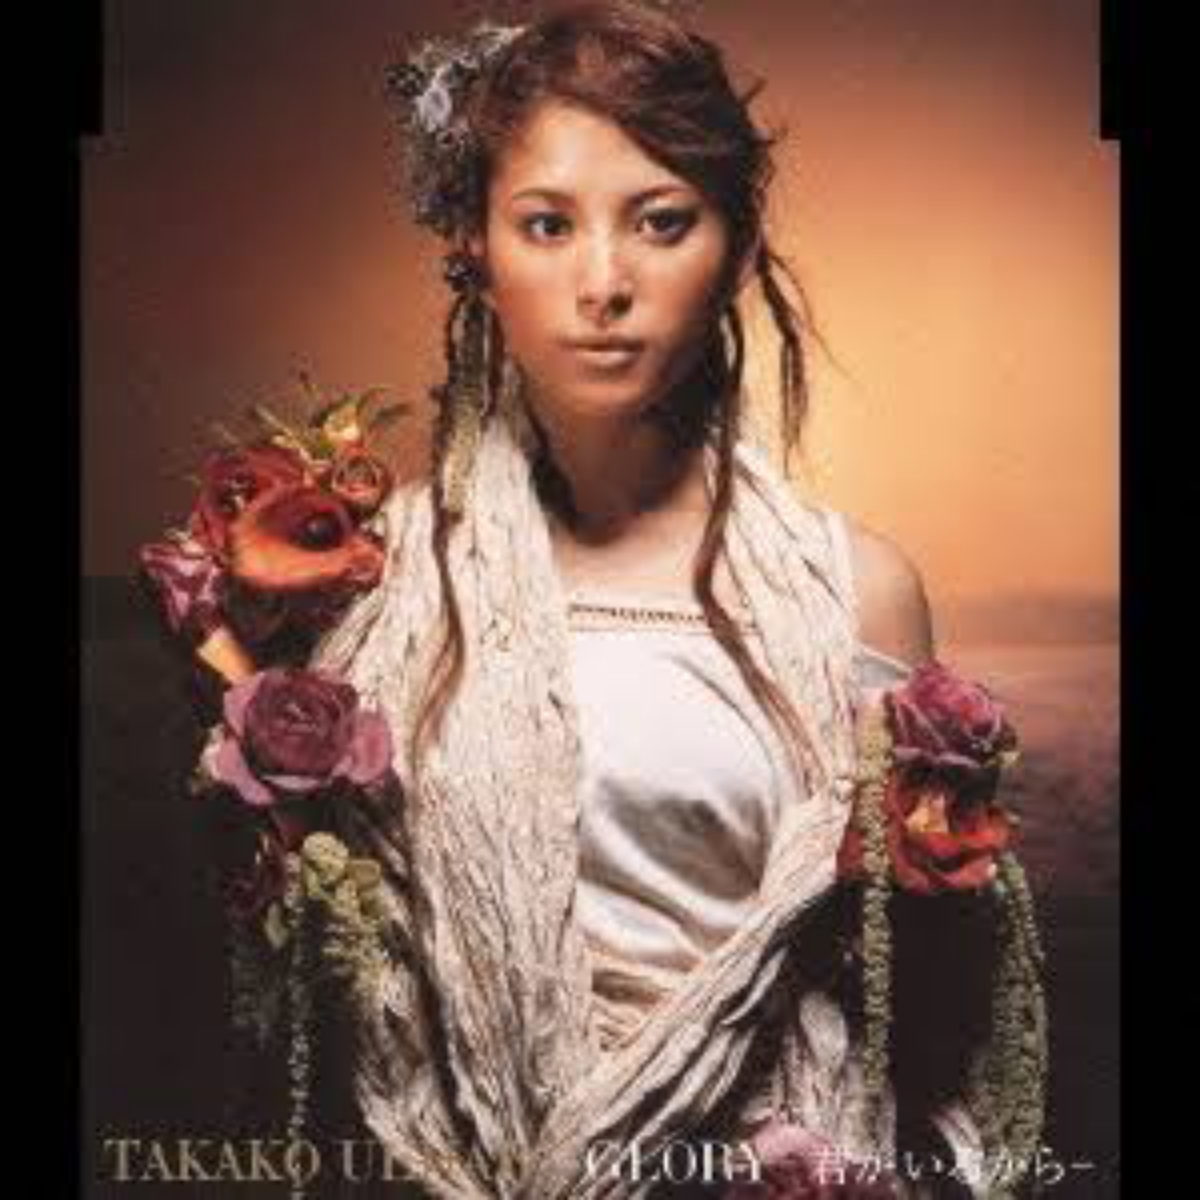 Takako Uehara - Glory ~Kimi ga iru Kara~